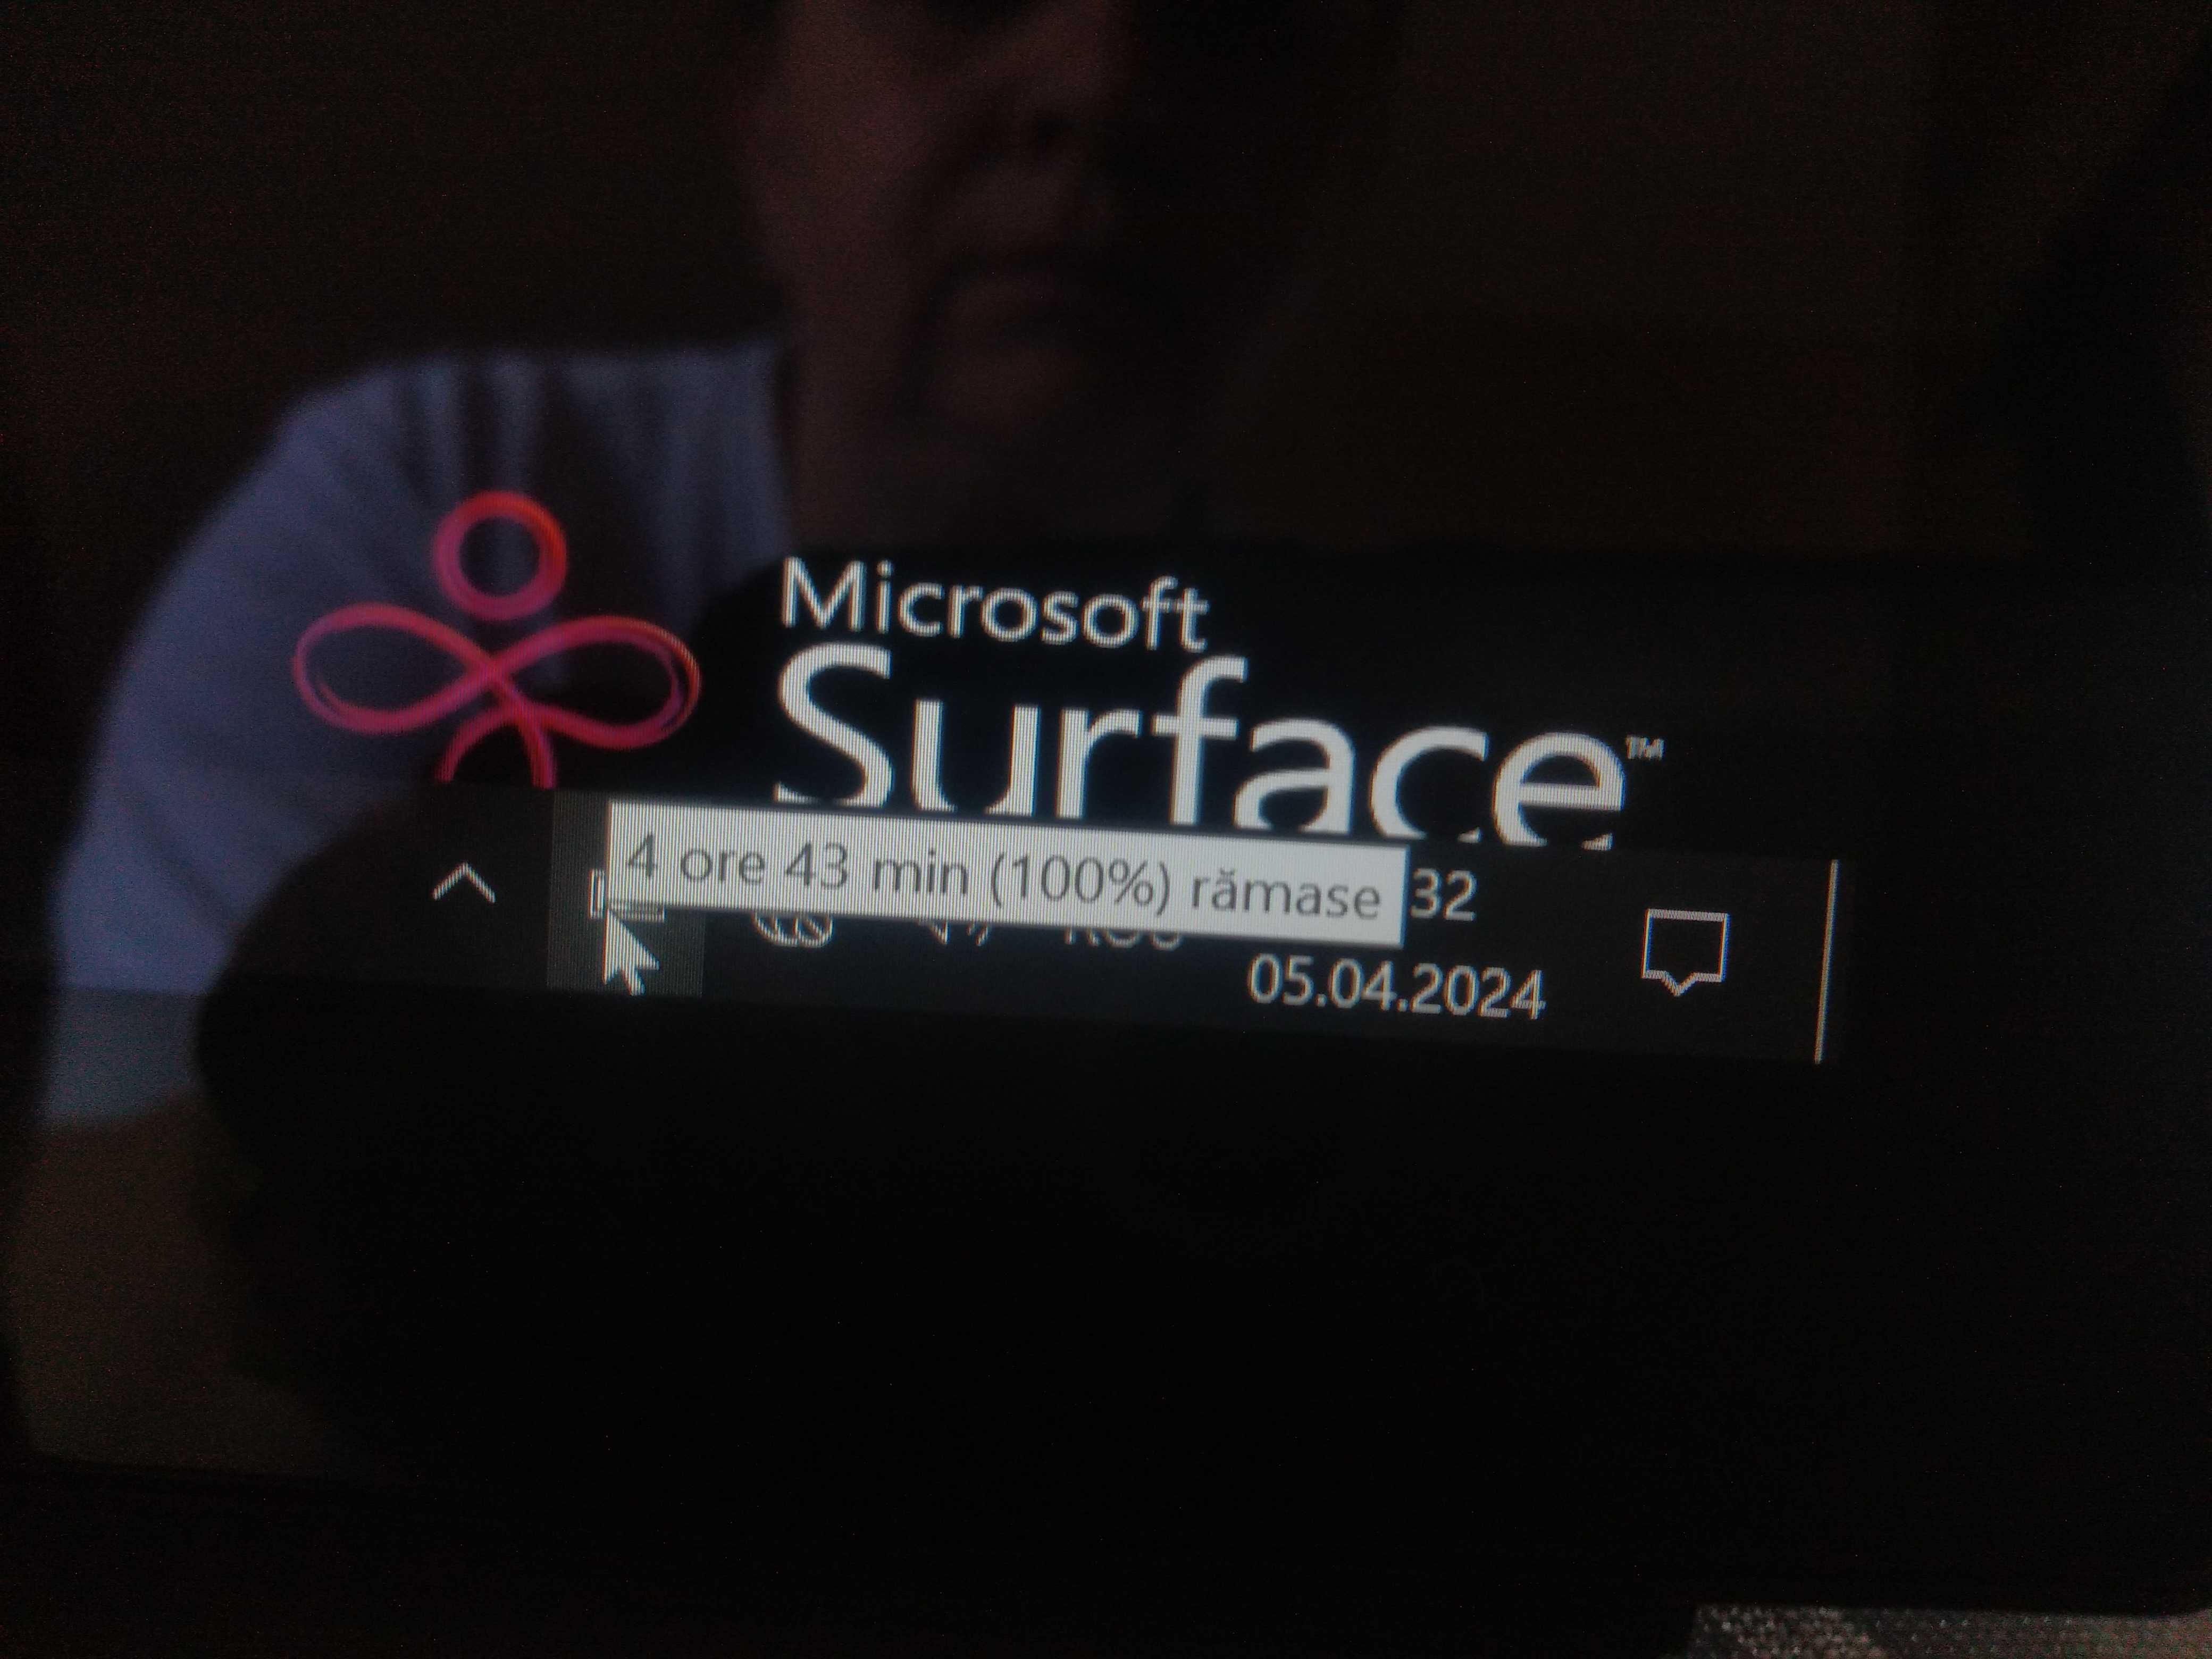 Microsoft Surface  cu proc. i5-3317u/64 gb/ 4gb/ windows 10